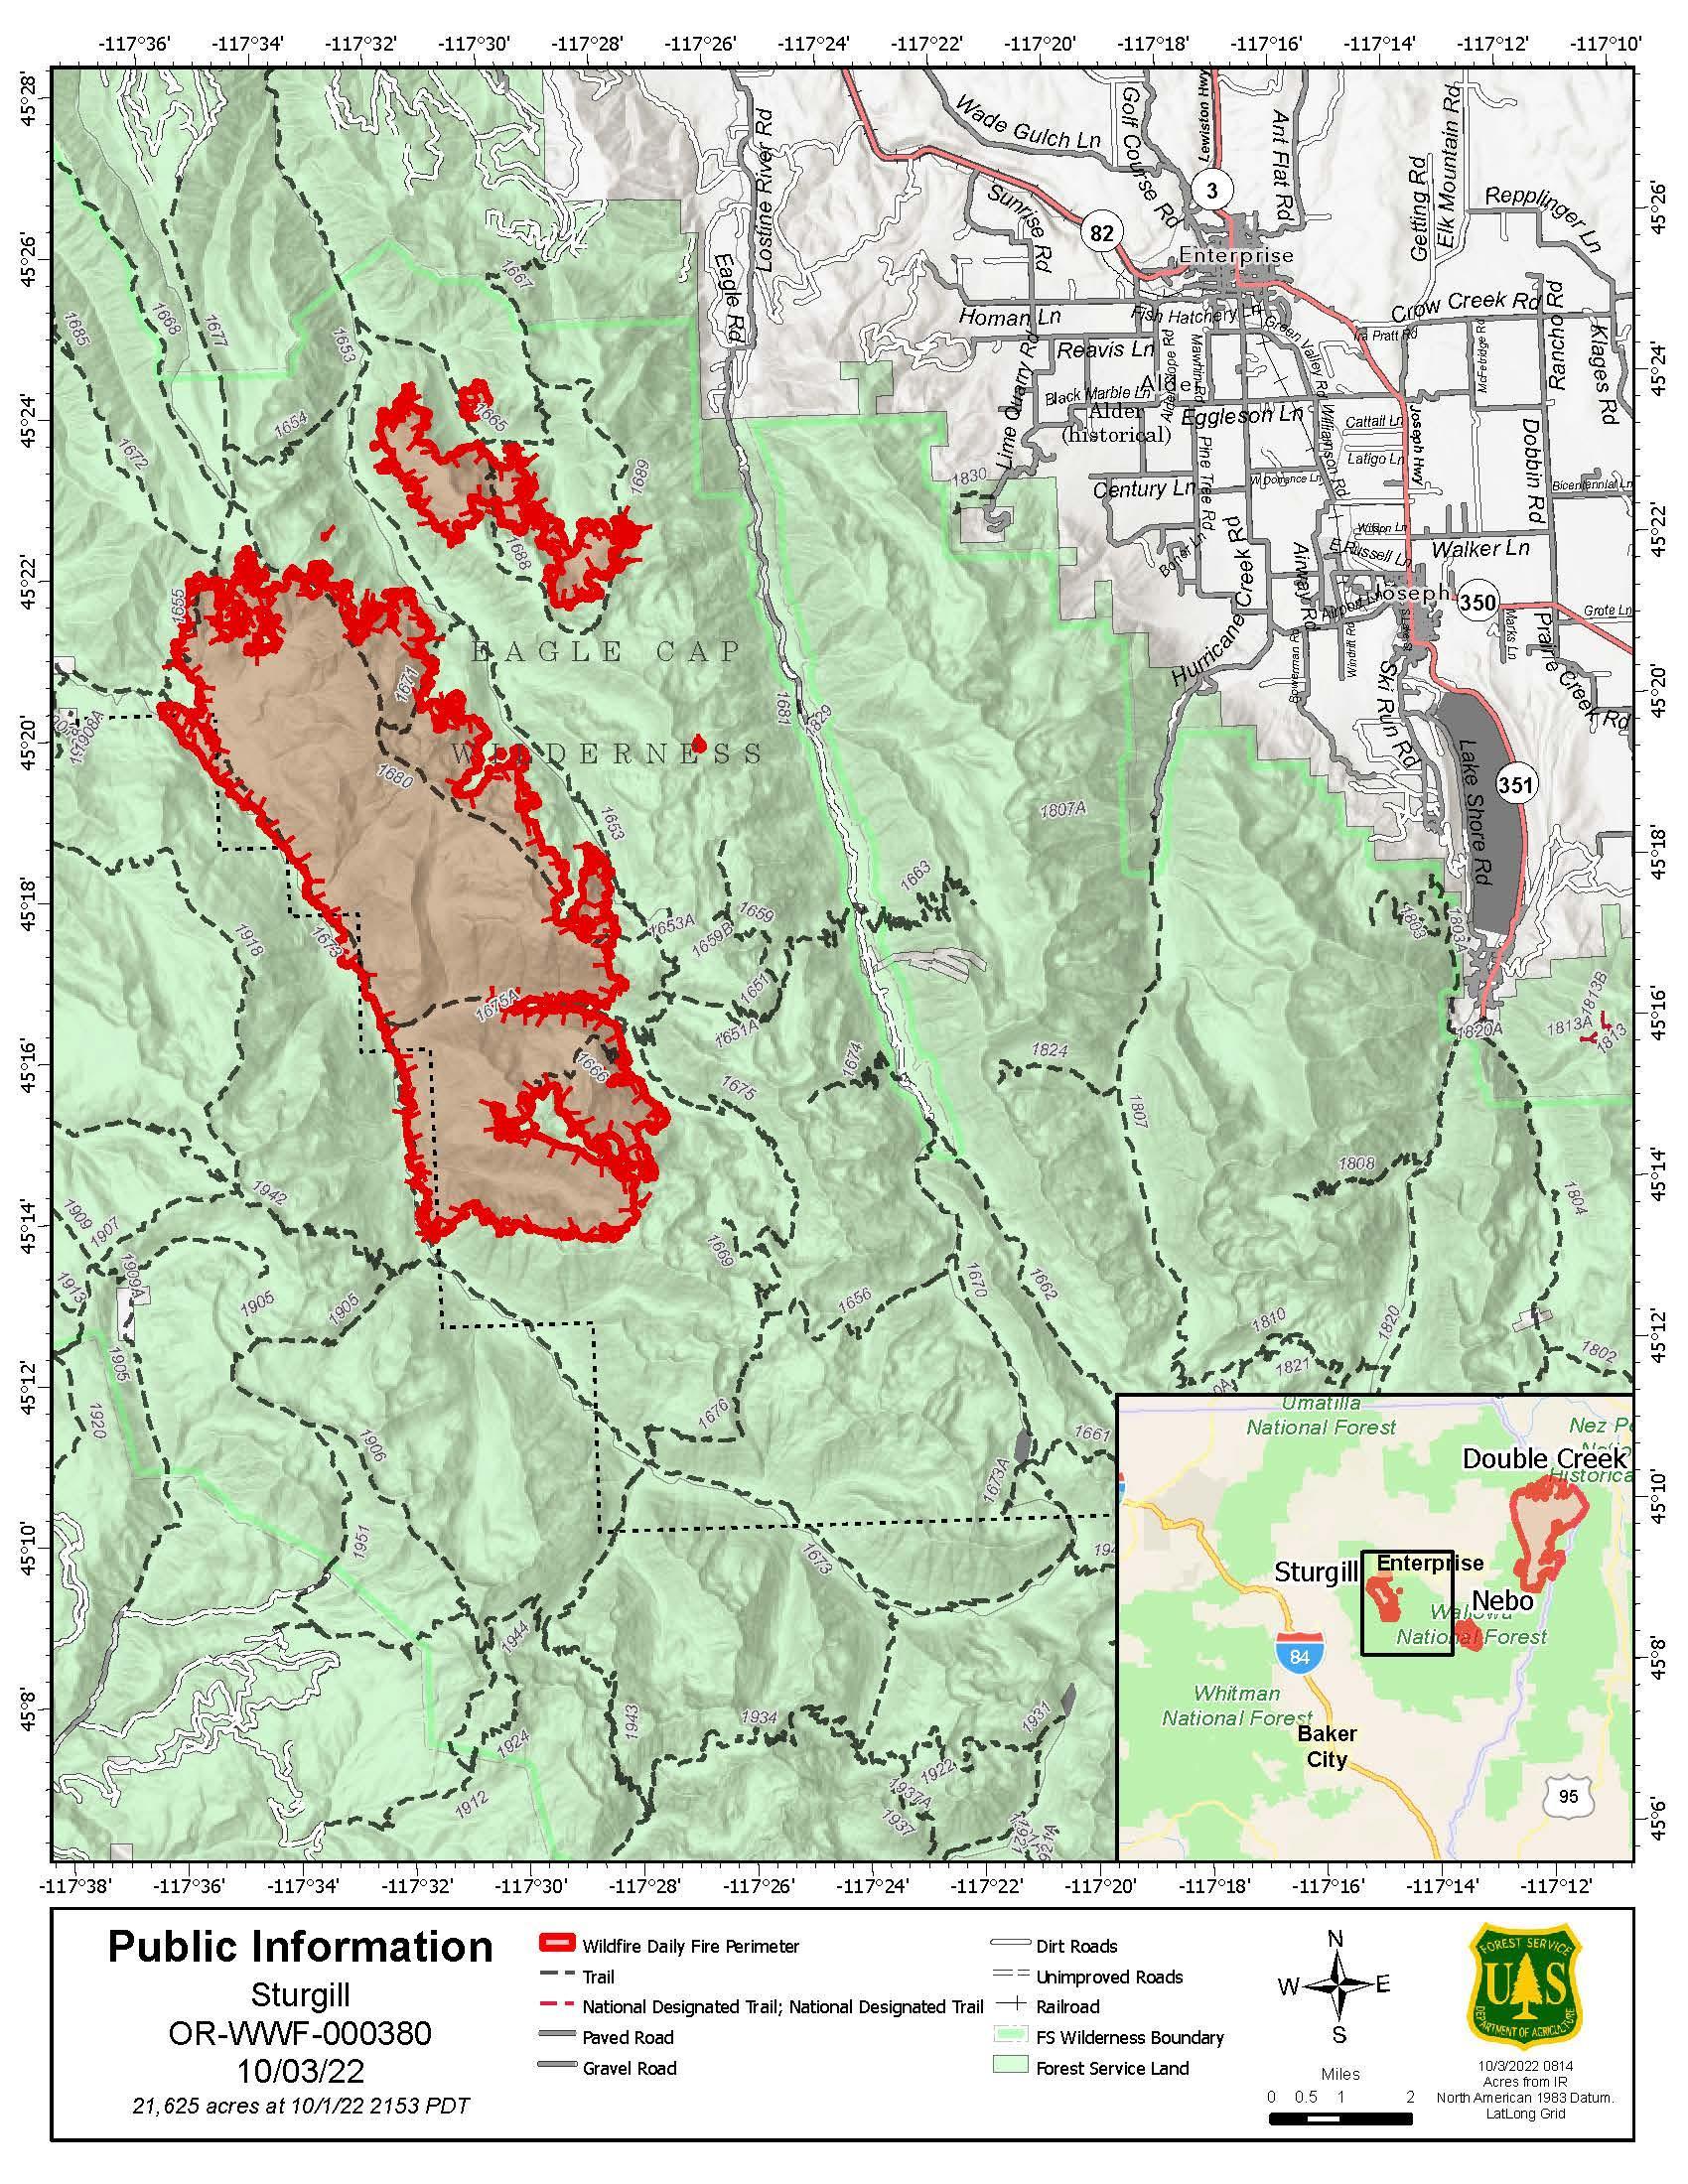 Goat Mountain 2 Fire Map - 20221003